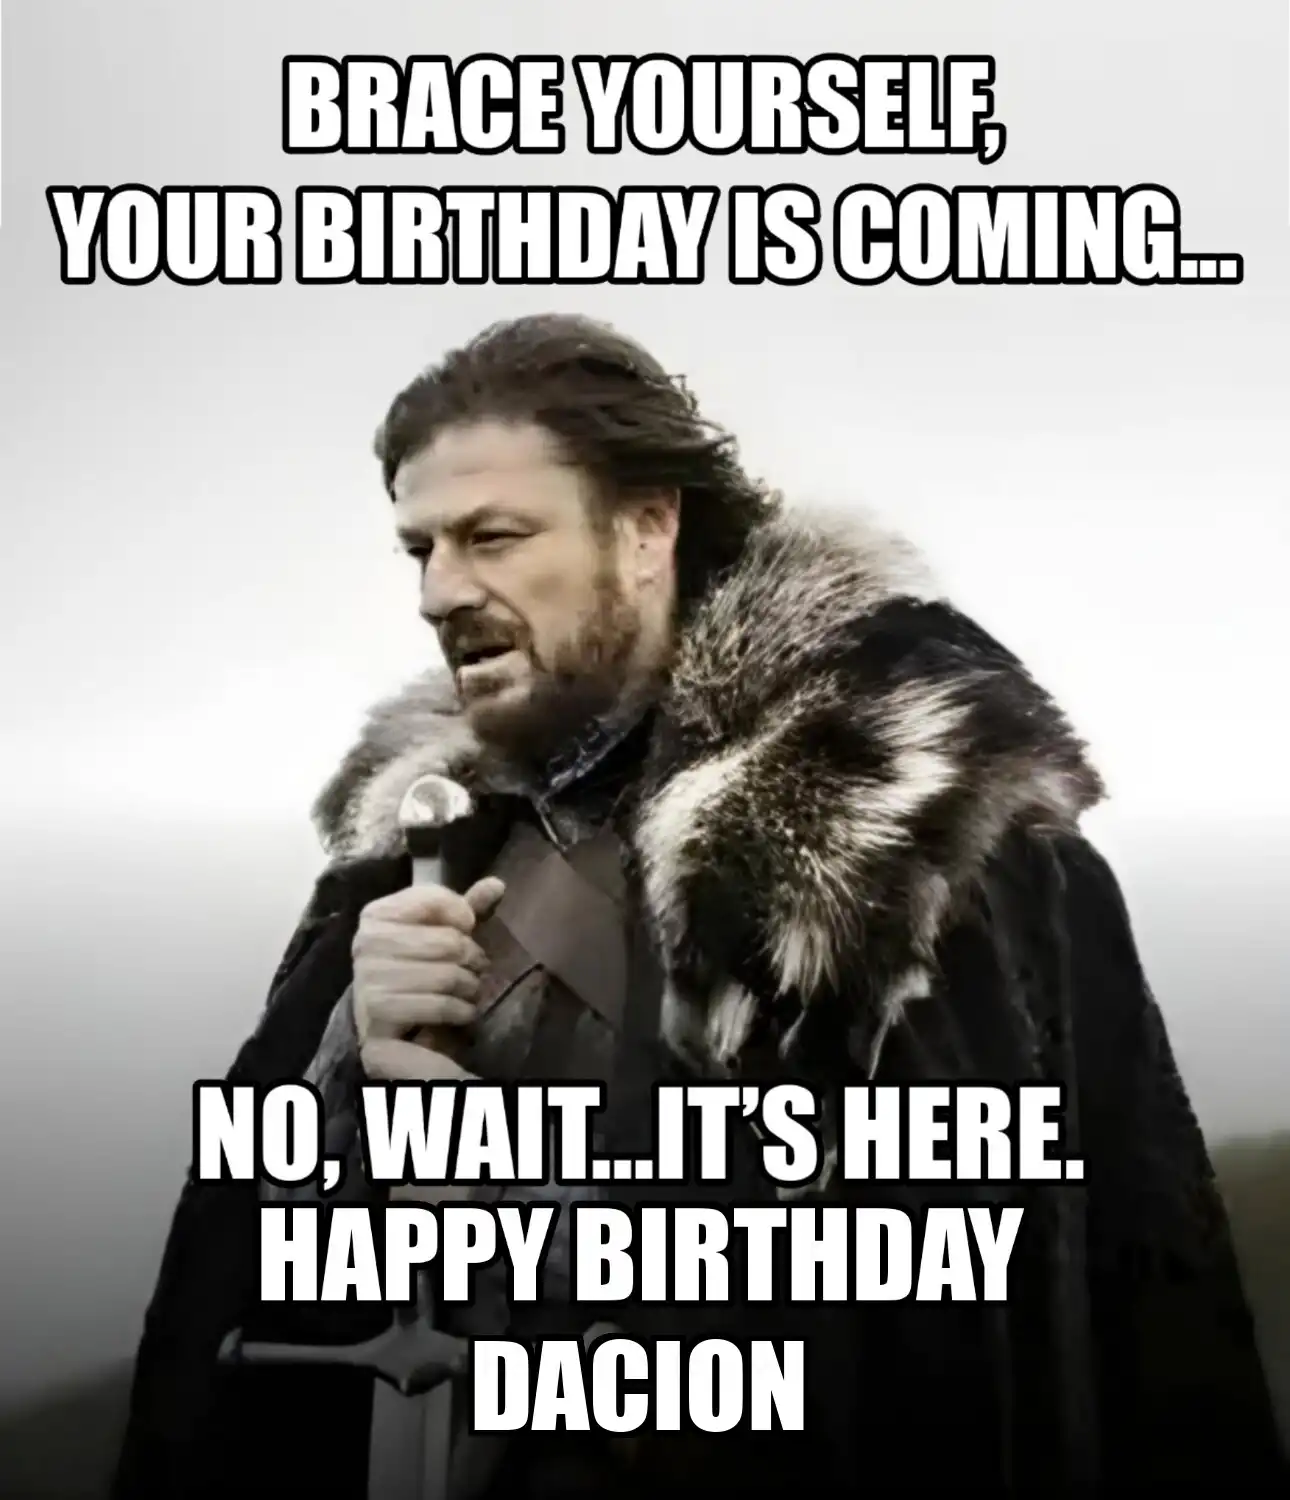 Happy Birthday Dacion Brace Yourself Your Birthday Is Coming Meme